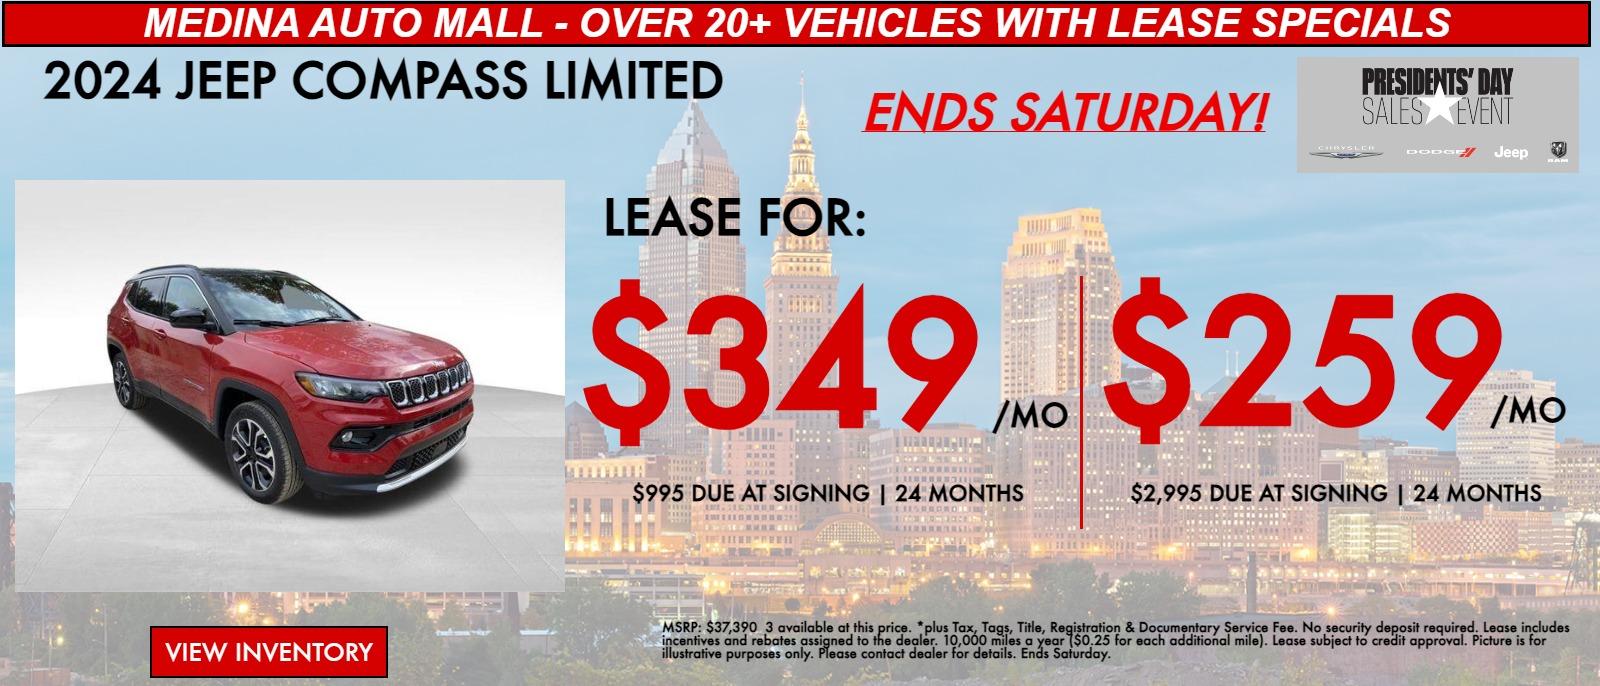 2024 Jeep Compass Lease Specials for Cleveland & Medina Medina Auto Mall